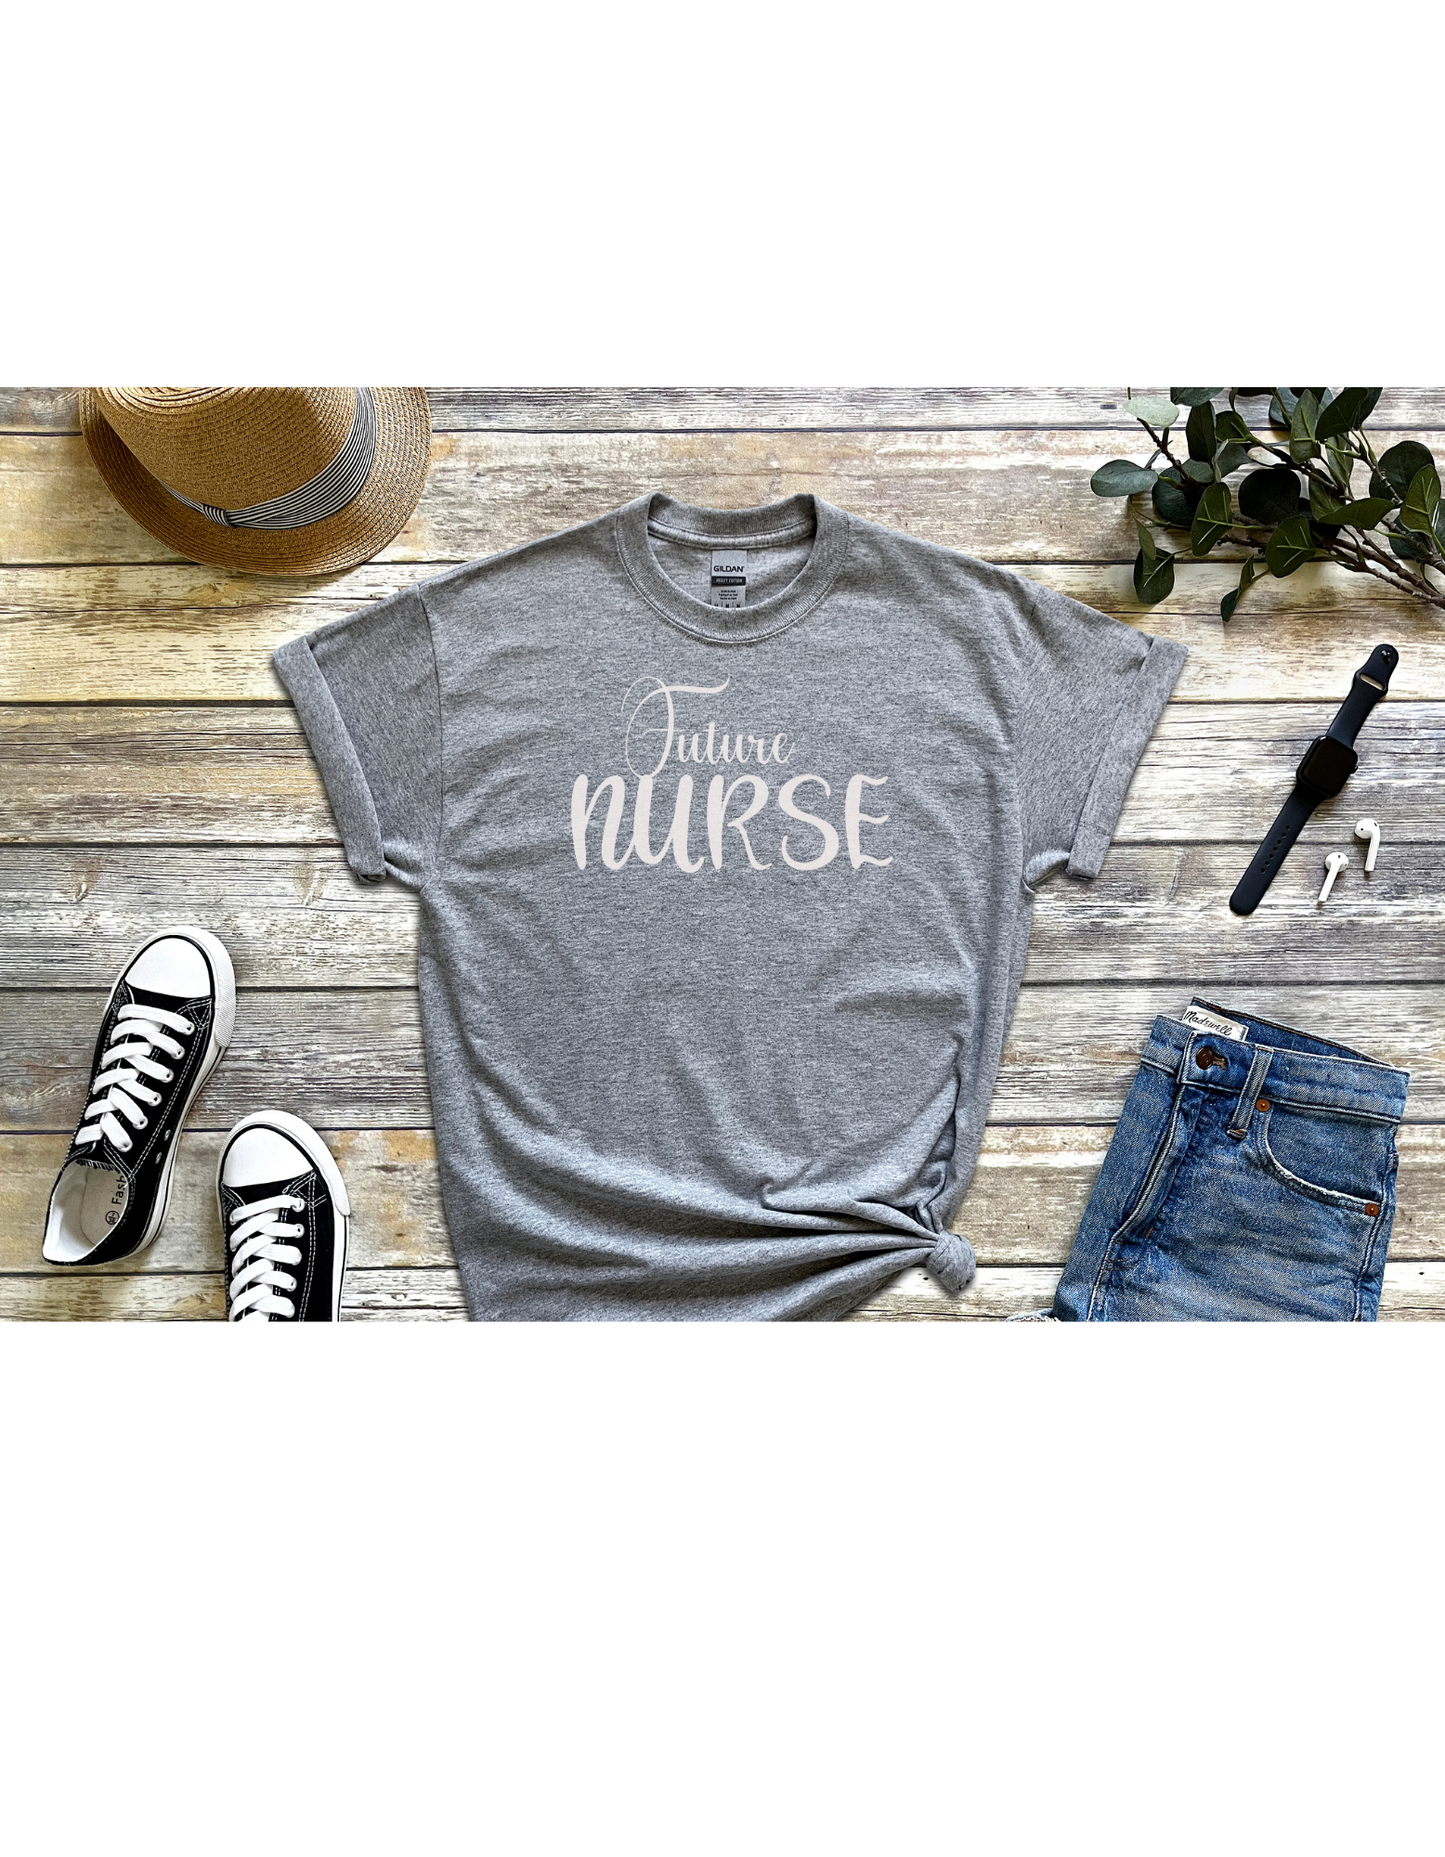 Future Nurse T-Shirt, Nursing Student Shirt, Nursing School Shirt, Nurse in Progress, Future Nurse Gift, Nurse in the Making